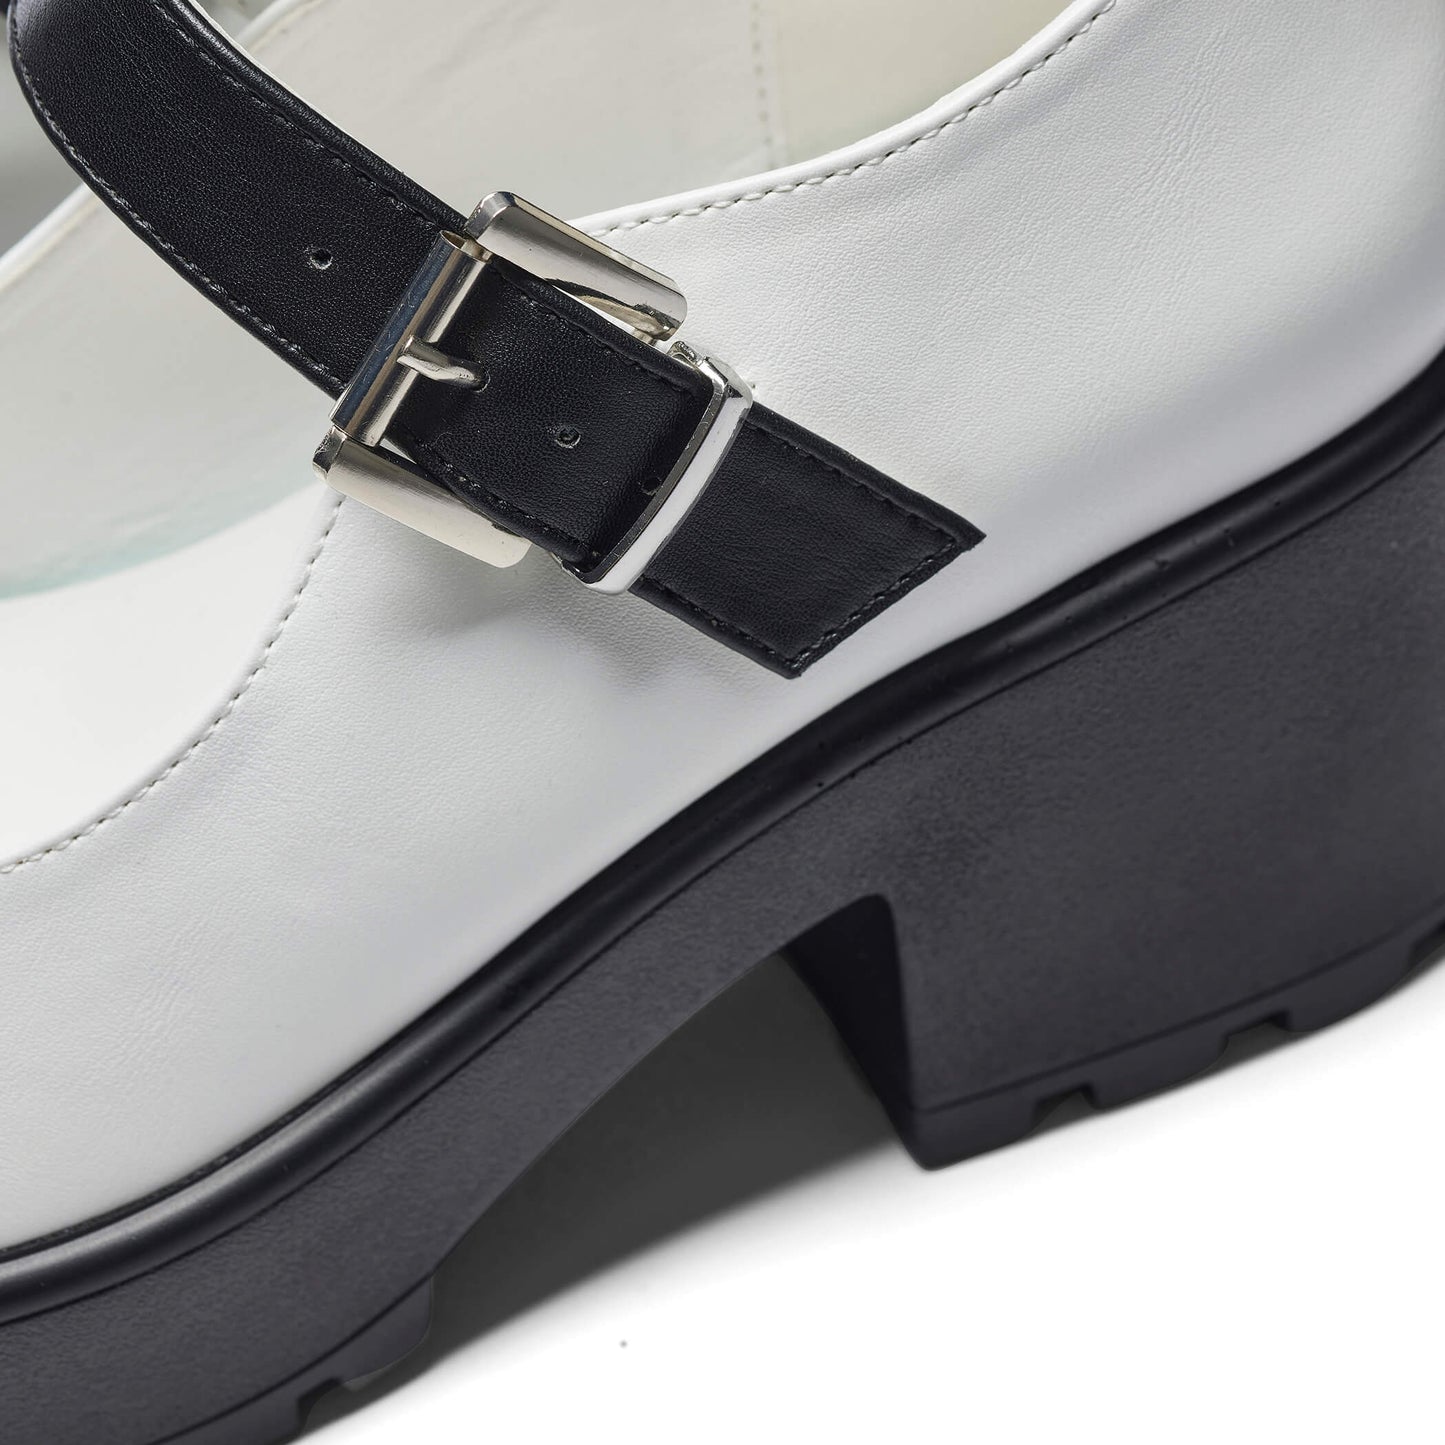 Tira Mary Jane Shoes 'Pondering Panda Edition' - Black & White - KOI Footwear - Buckle Details